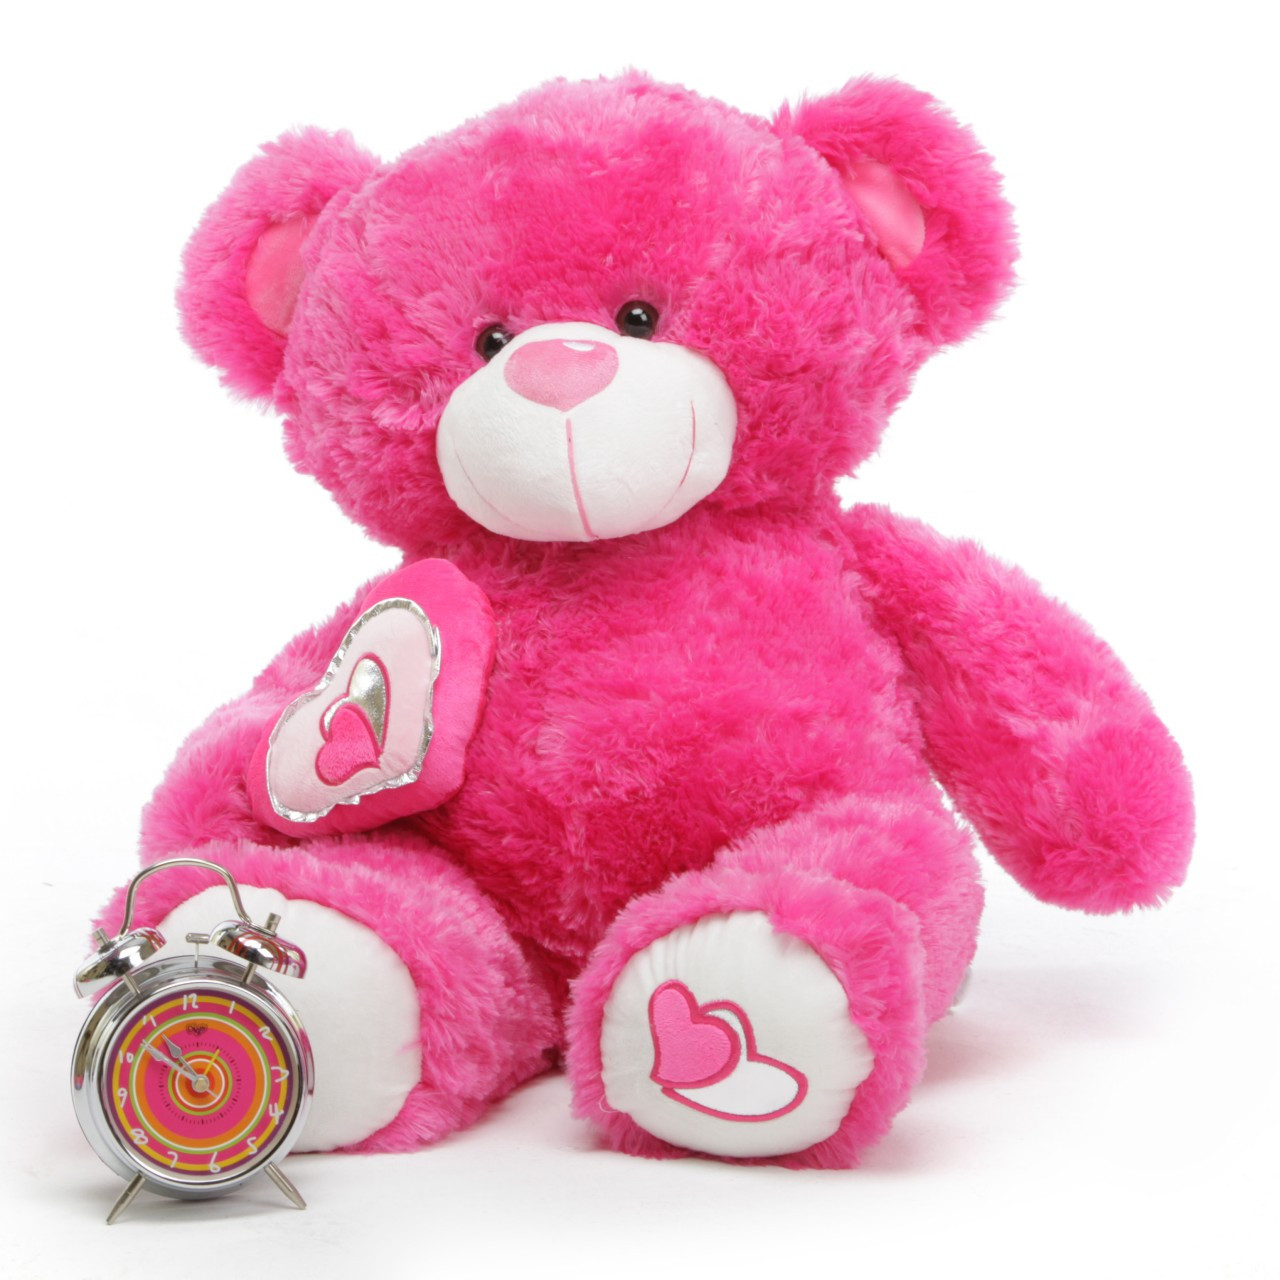 ChaCha Big Love 30" Hot Pink Valentine Teddy Bear - Giant 